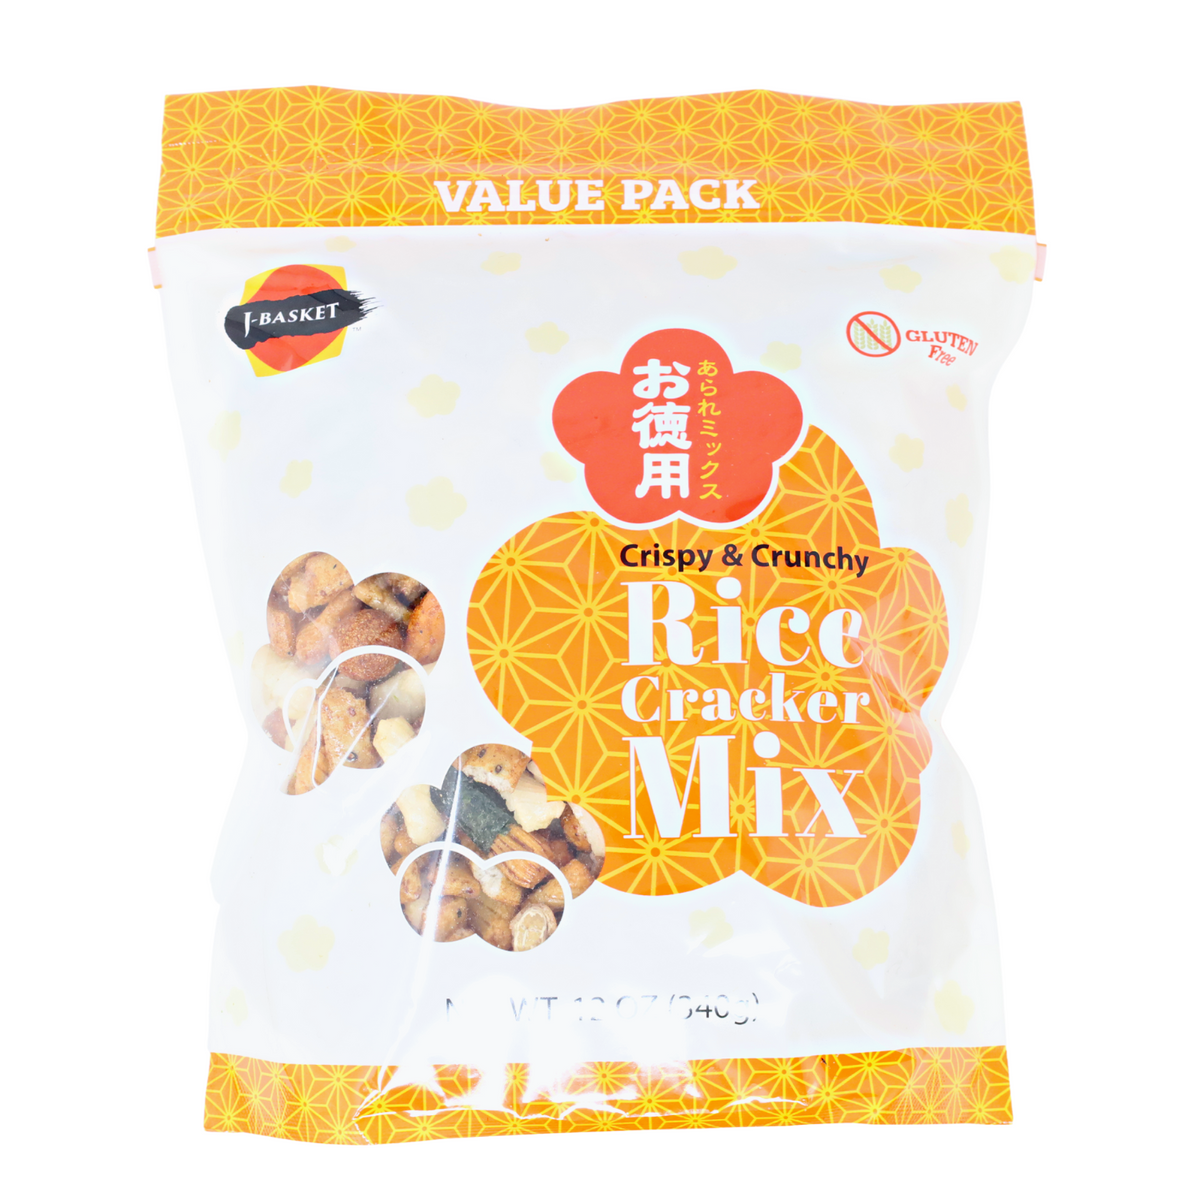 J-Basket Rice Cracker Mix Value pack Gluten Free 12oz/340g